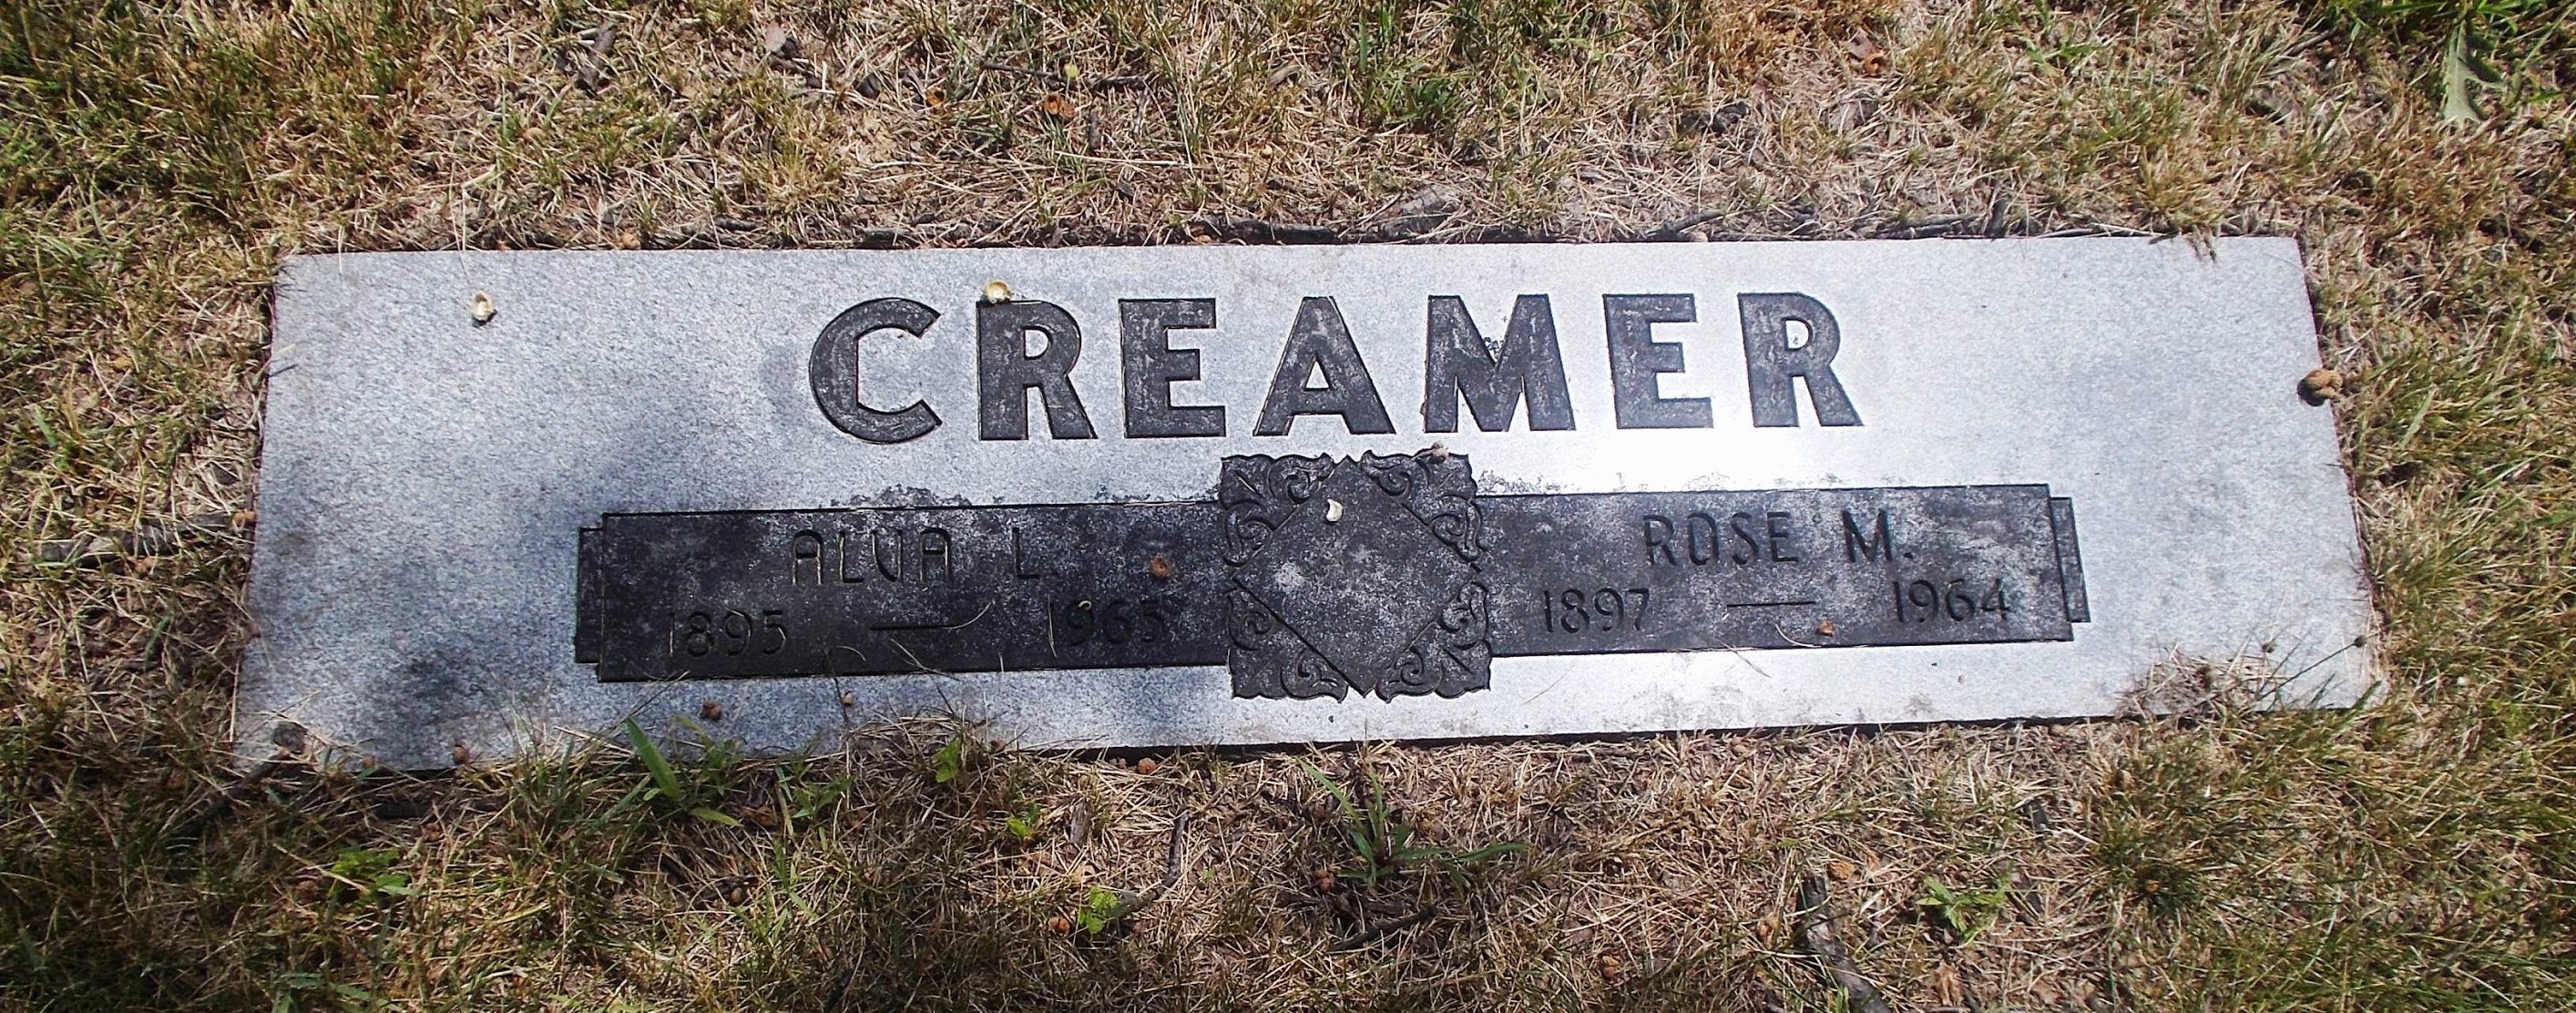 Rose M Creamer